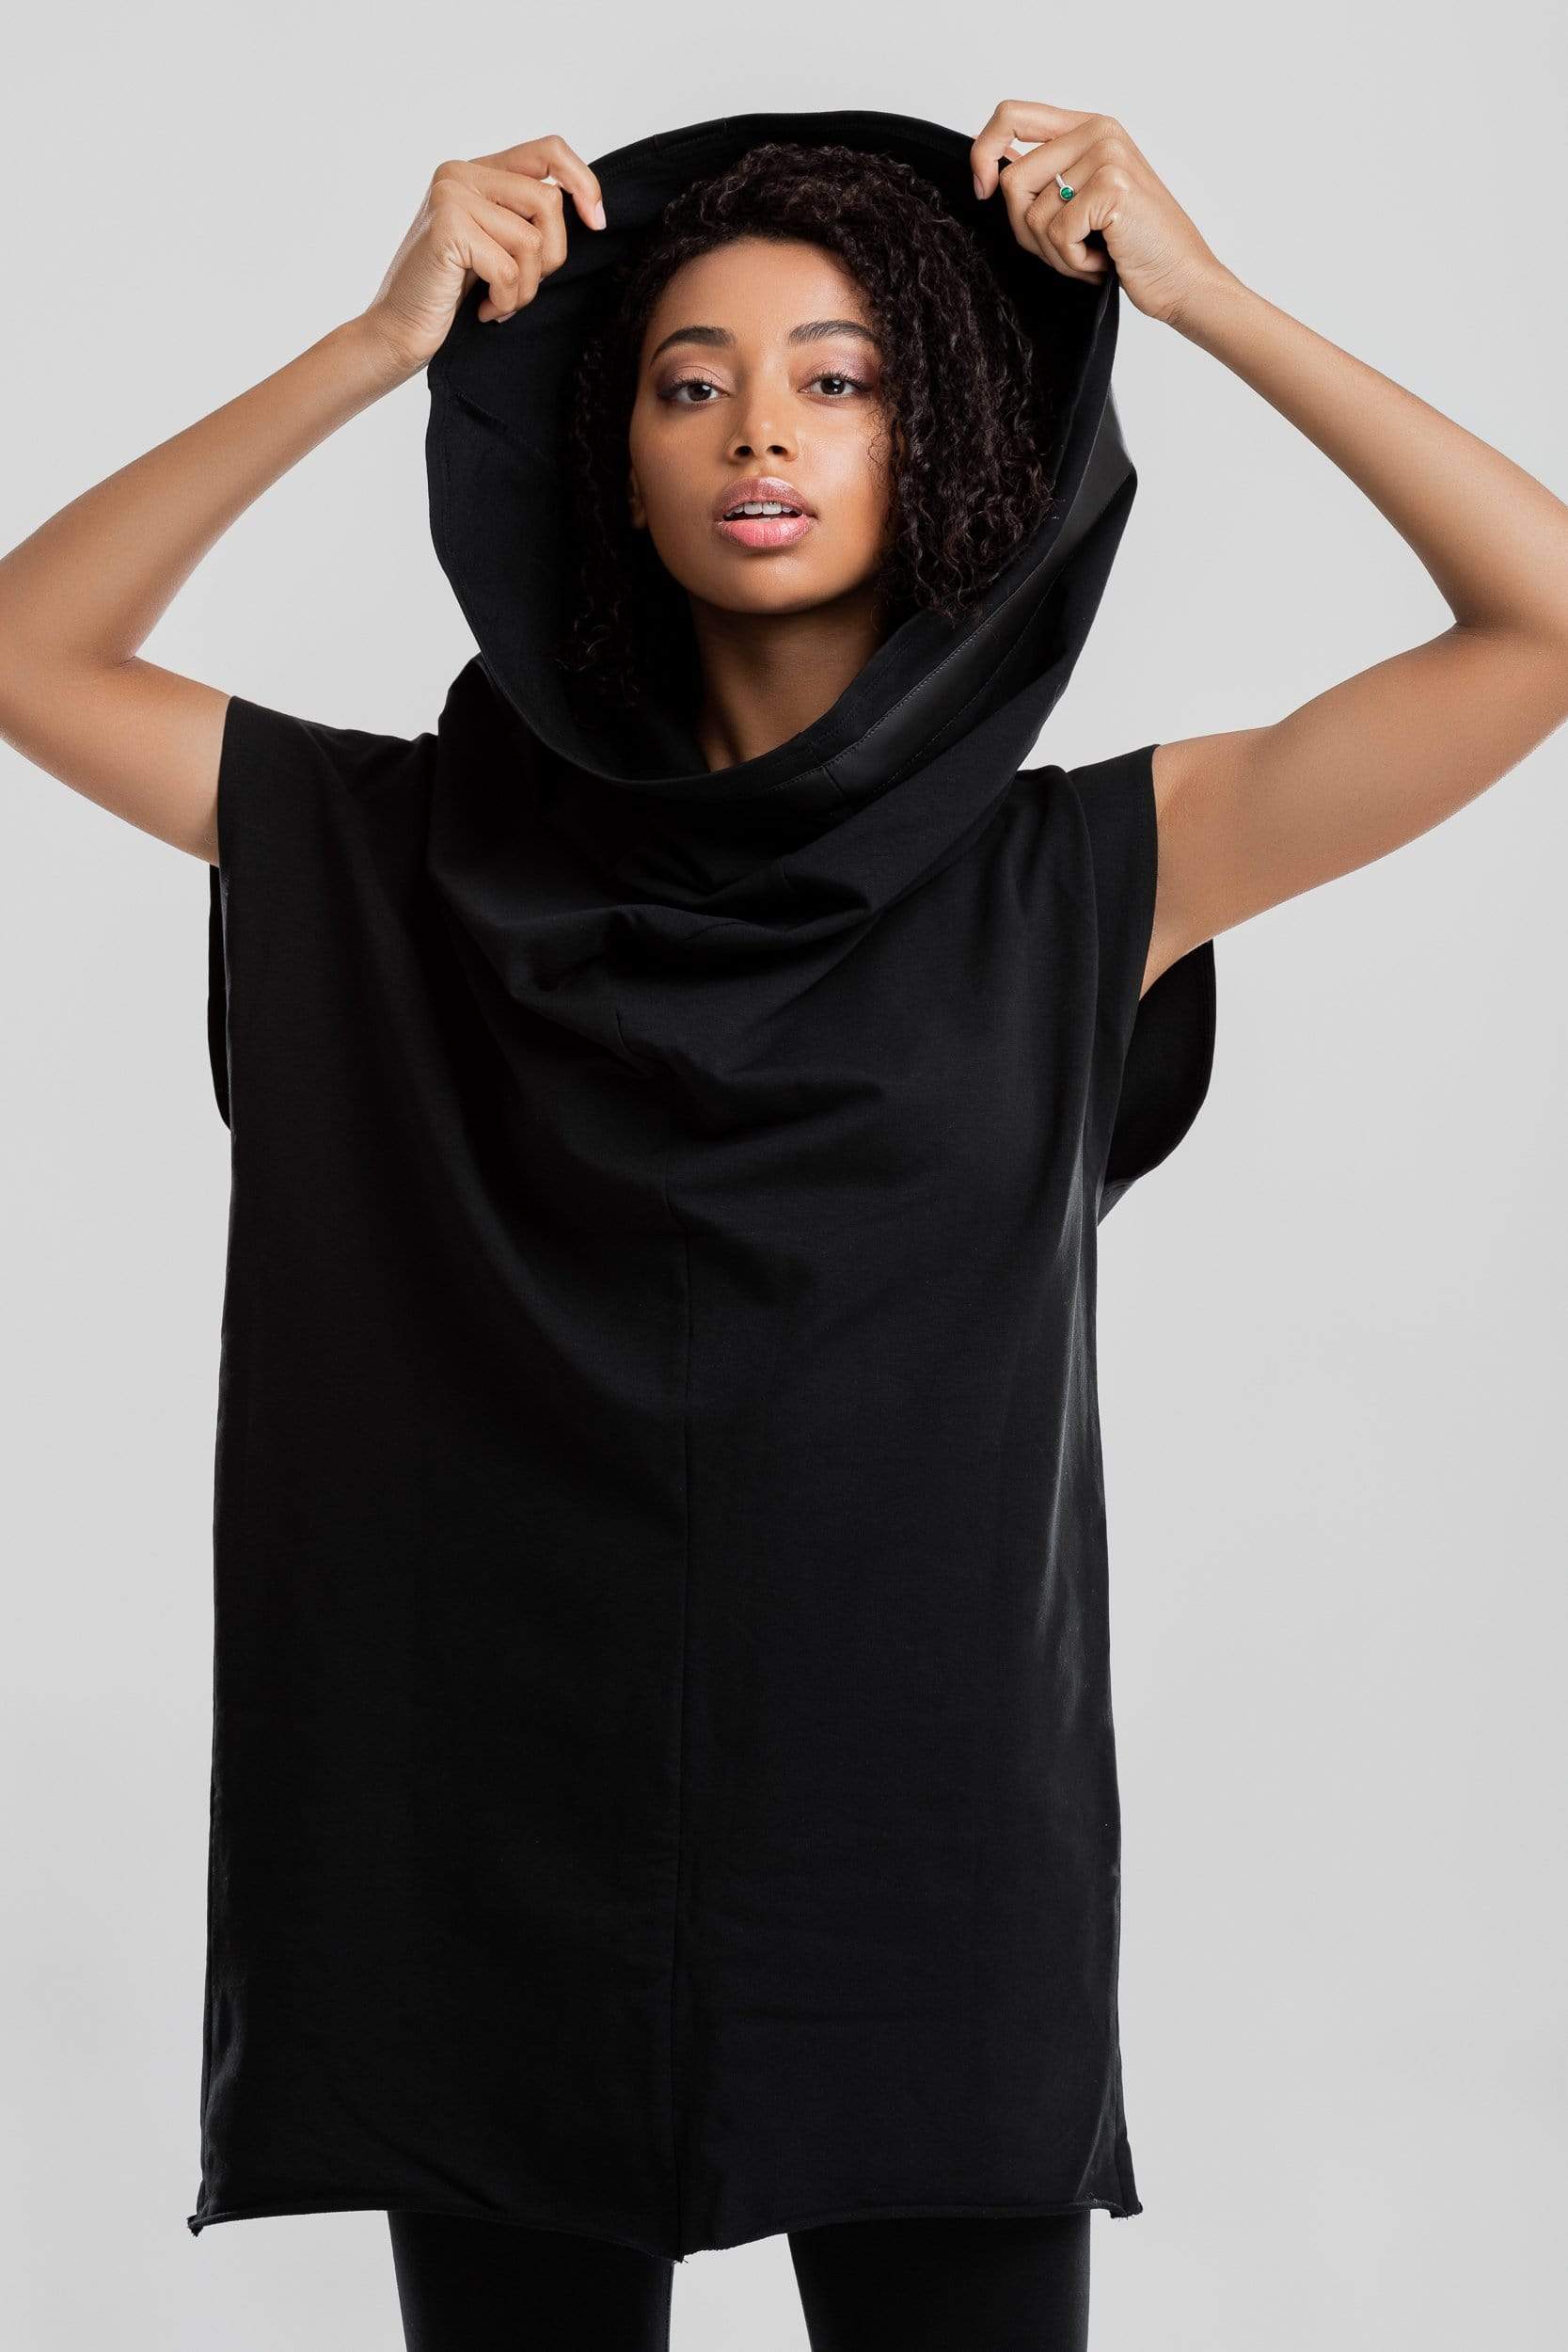 MDNT45 Sweaters, Tunics & Tops Women Hooded Shirt